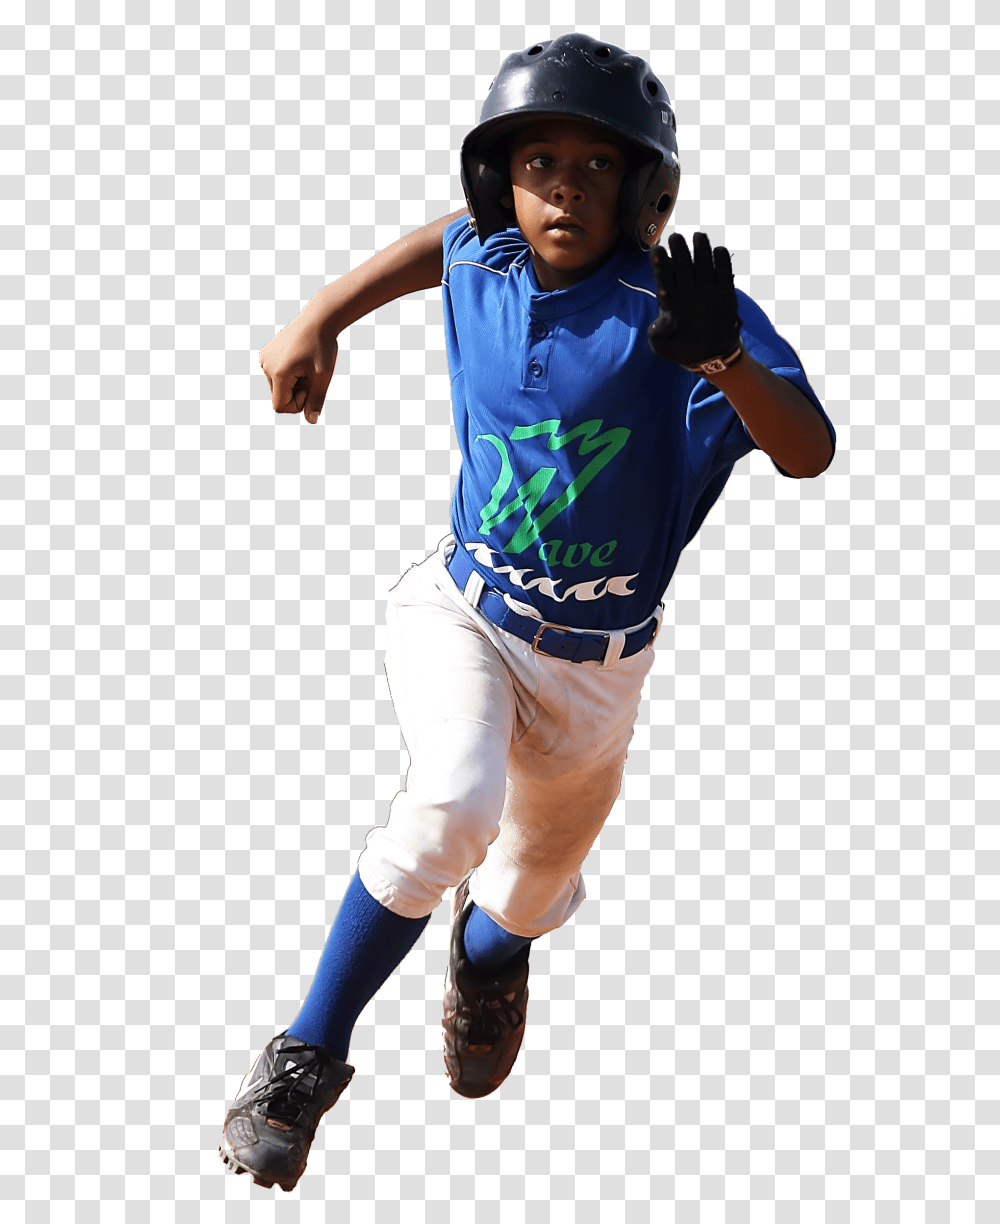 Baseball 1544467 Baseball Player Full Size Download Baseball, Clothing, Person, Dance Pose, Leisure Activities Transparent Png